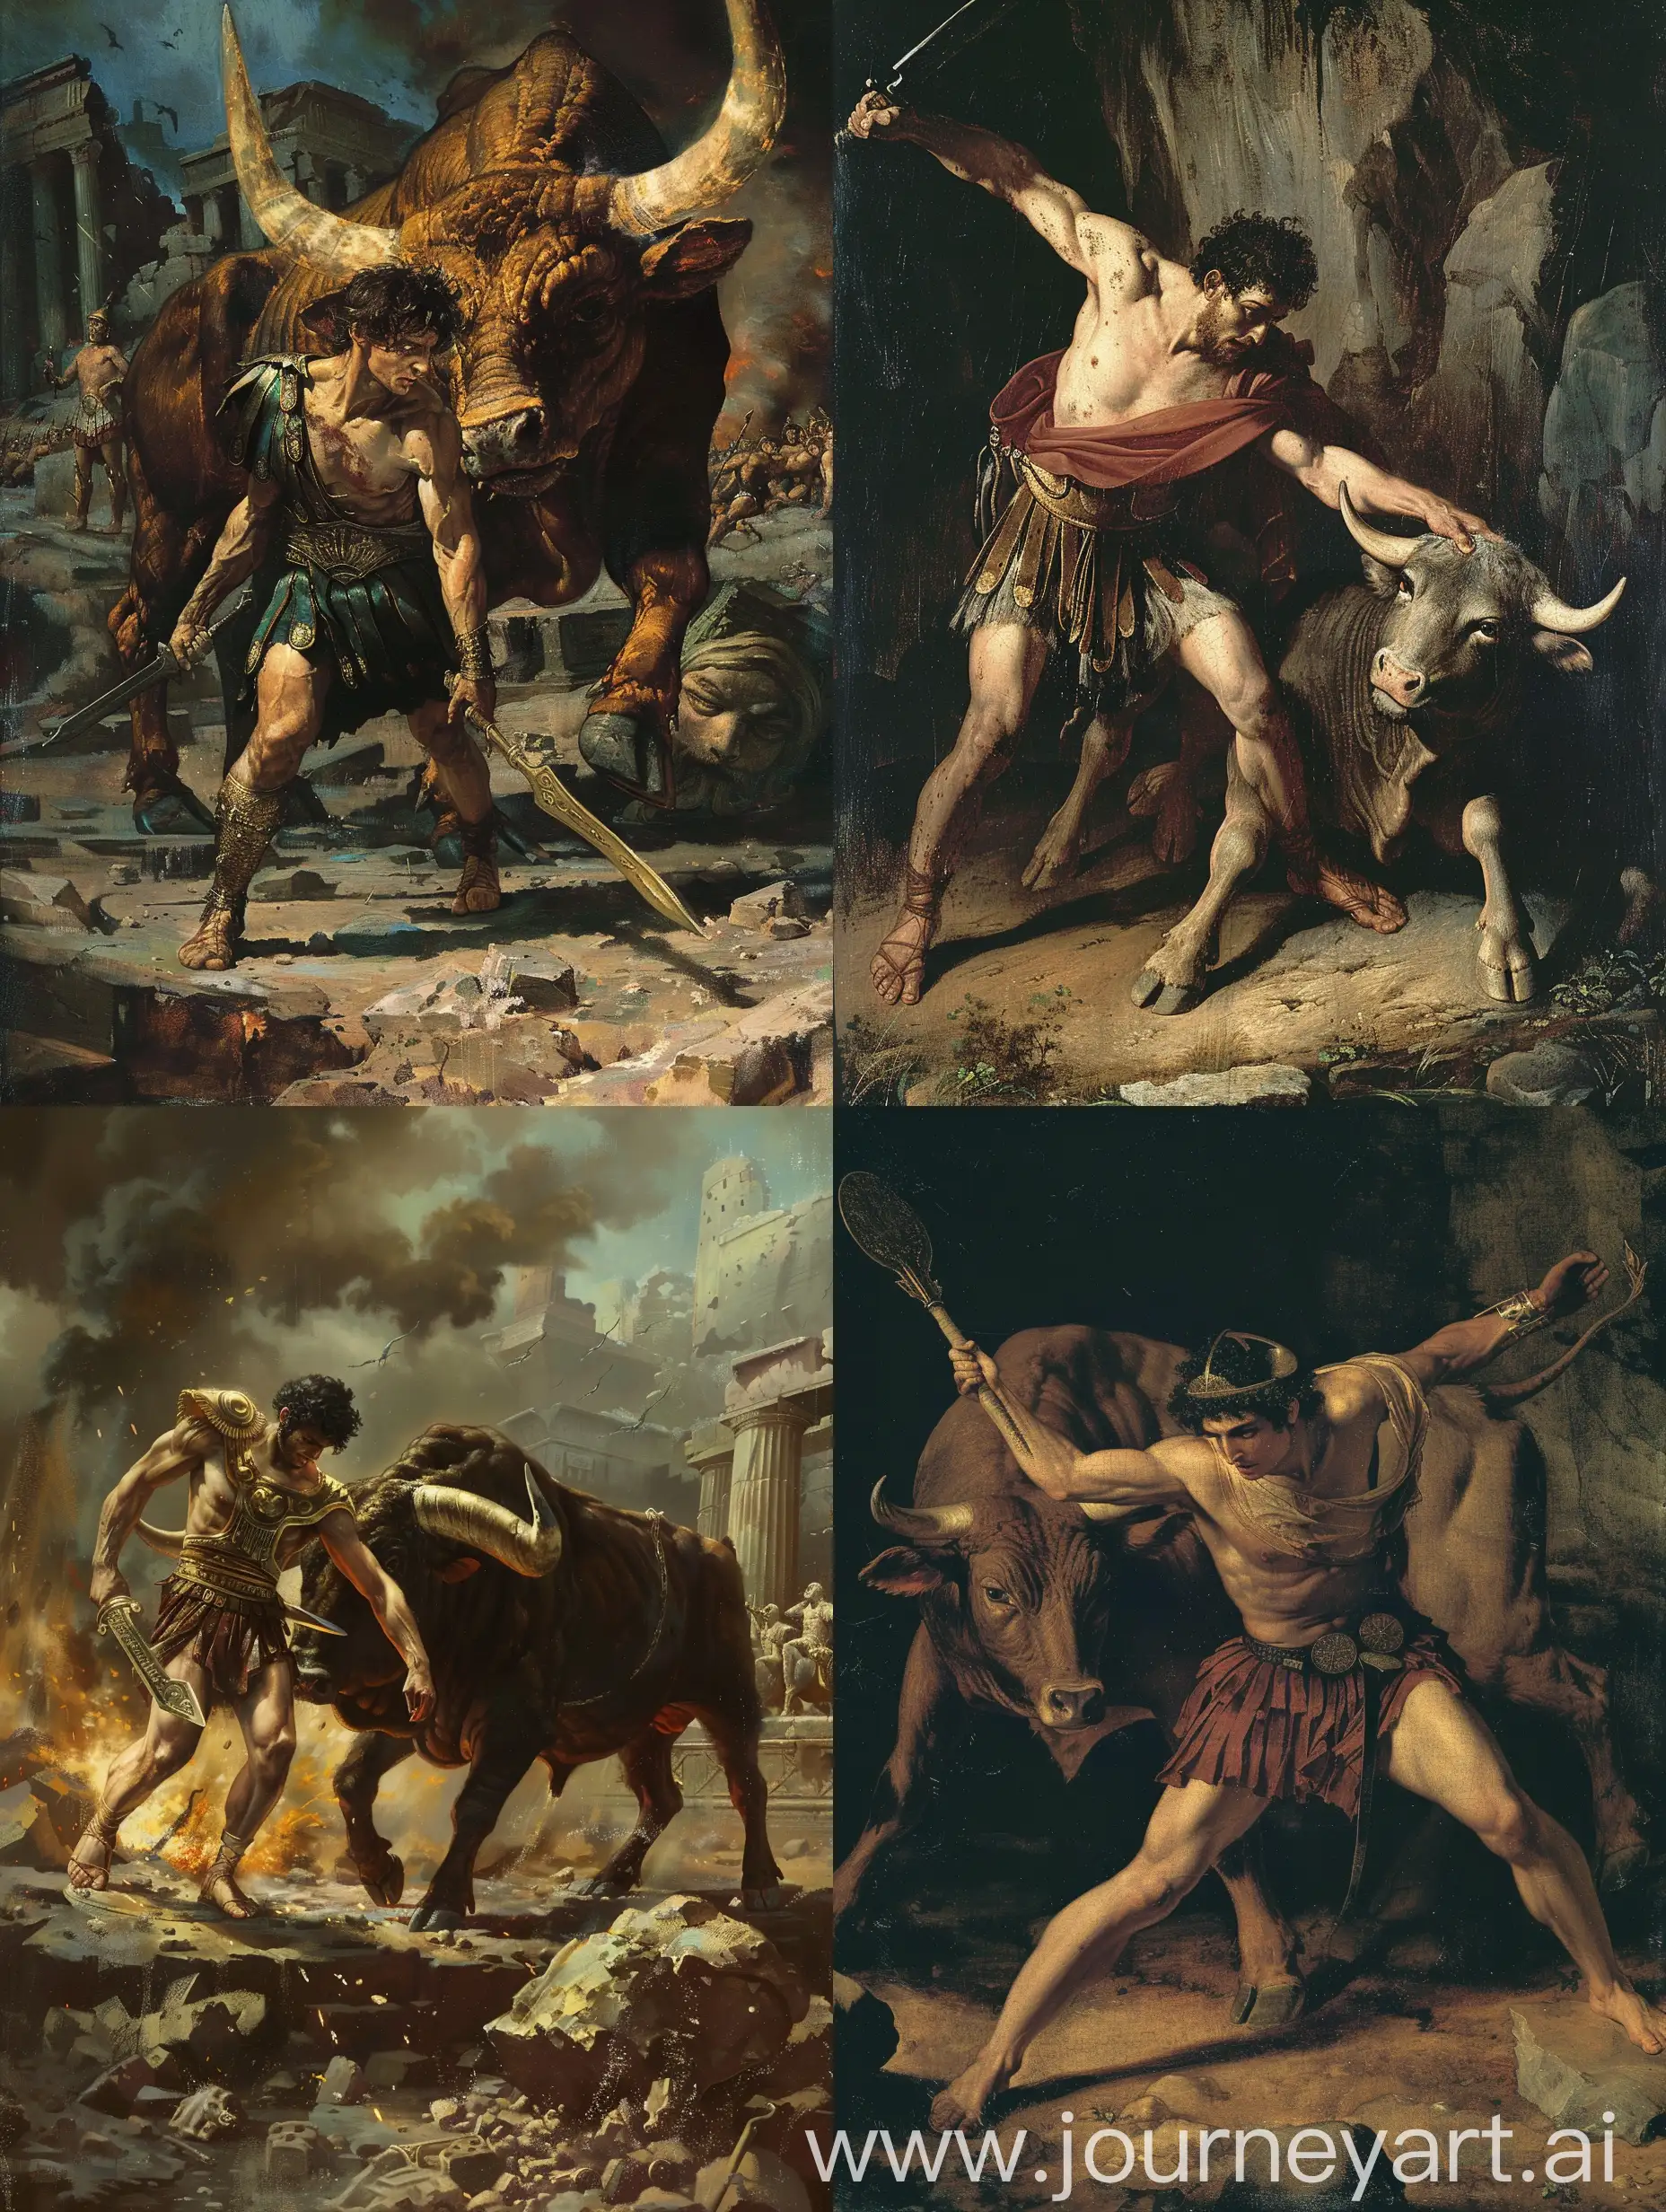 The ancient hero Theseus kills the ancient bull Minotaur